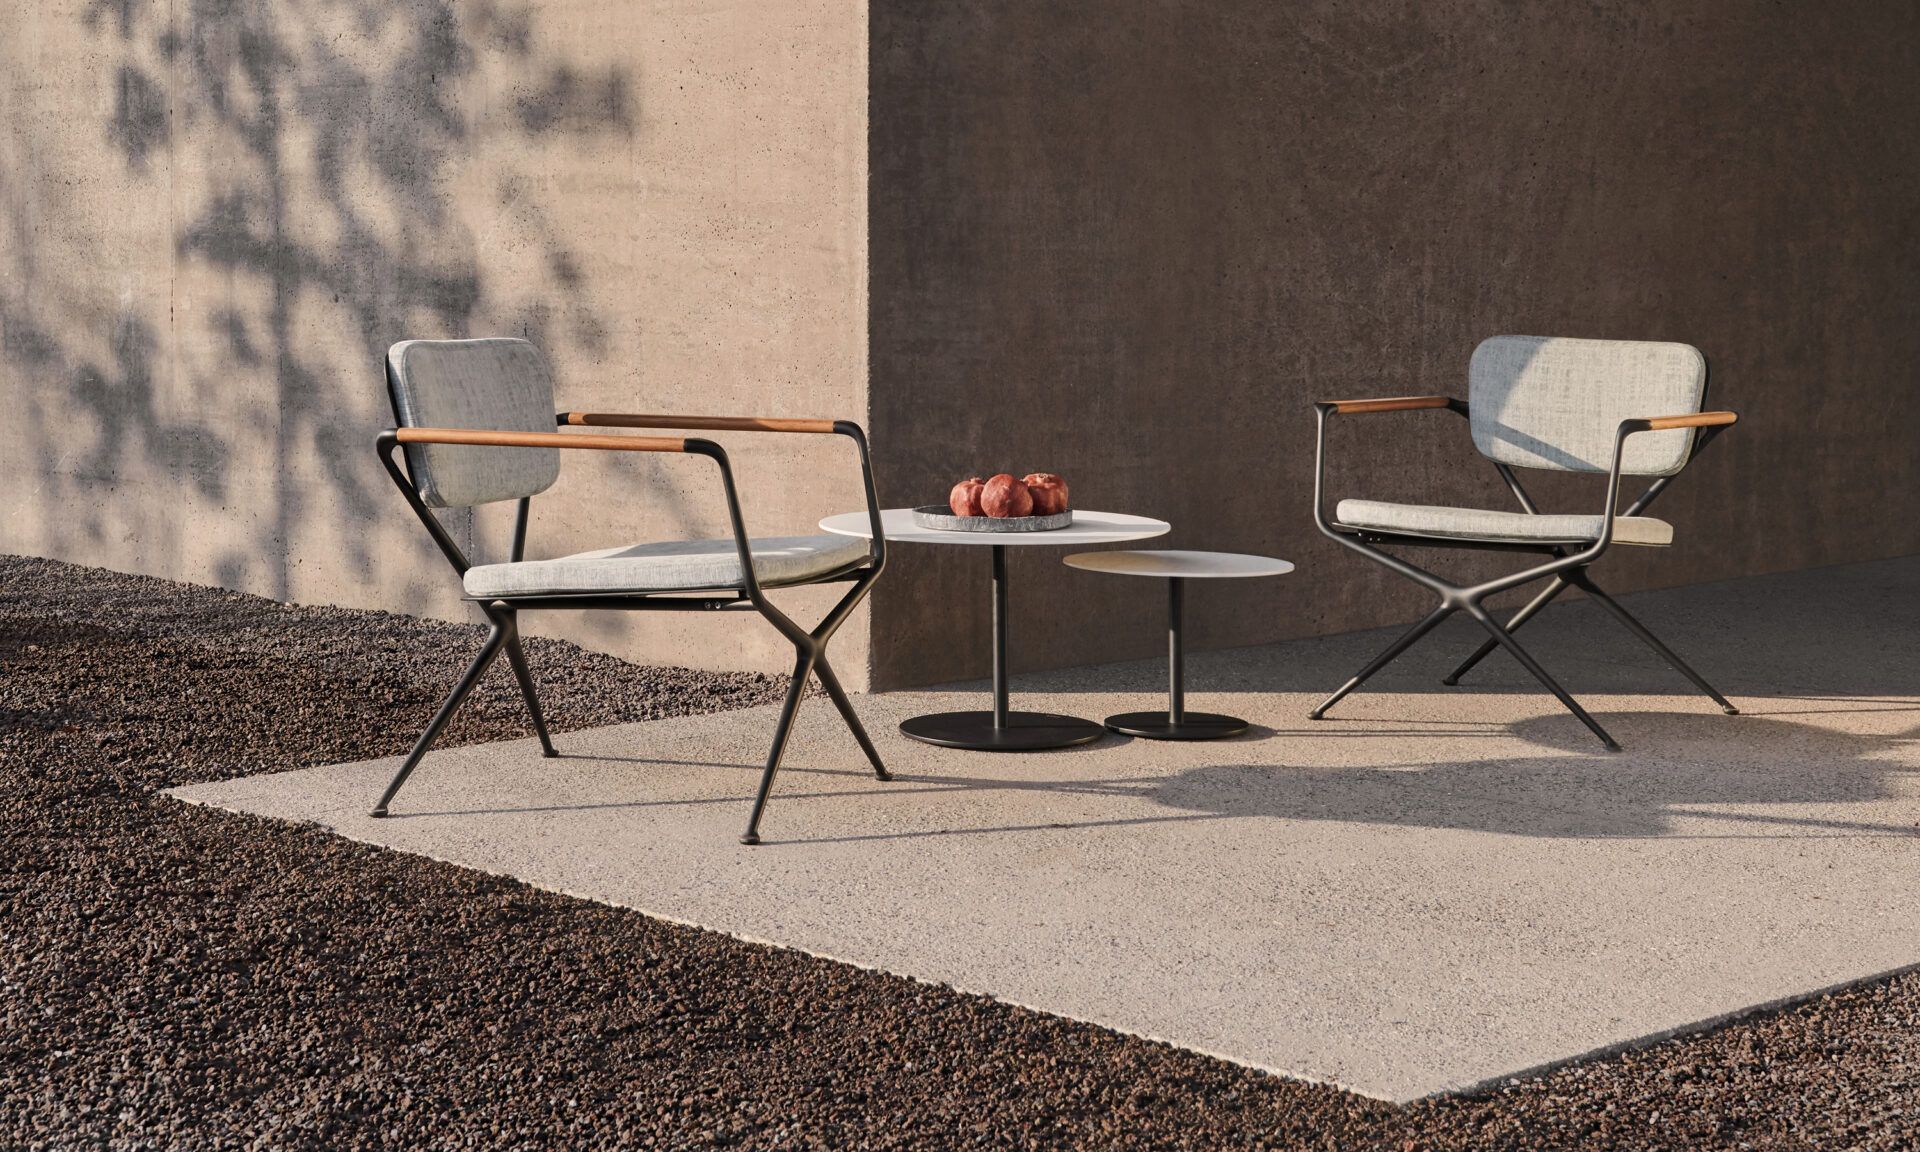 Exes Table 220x120cm Alu Legs Sand - Table Top Ceramic Terra Sabbia